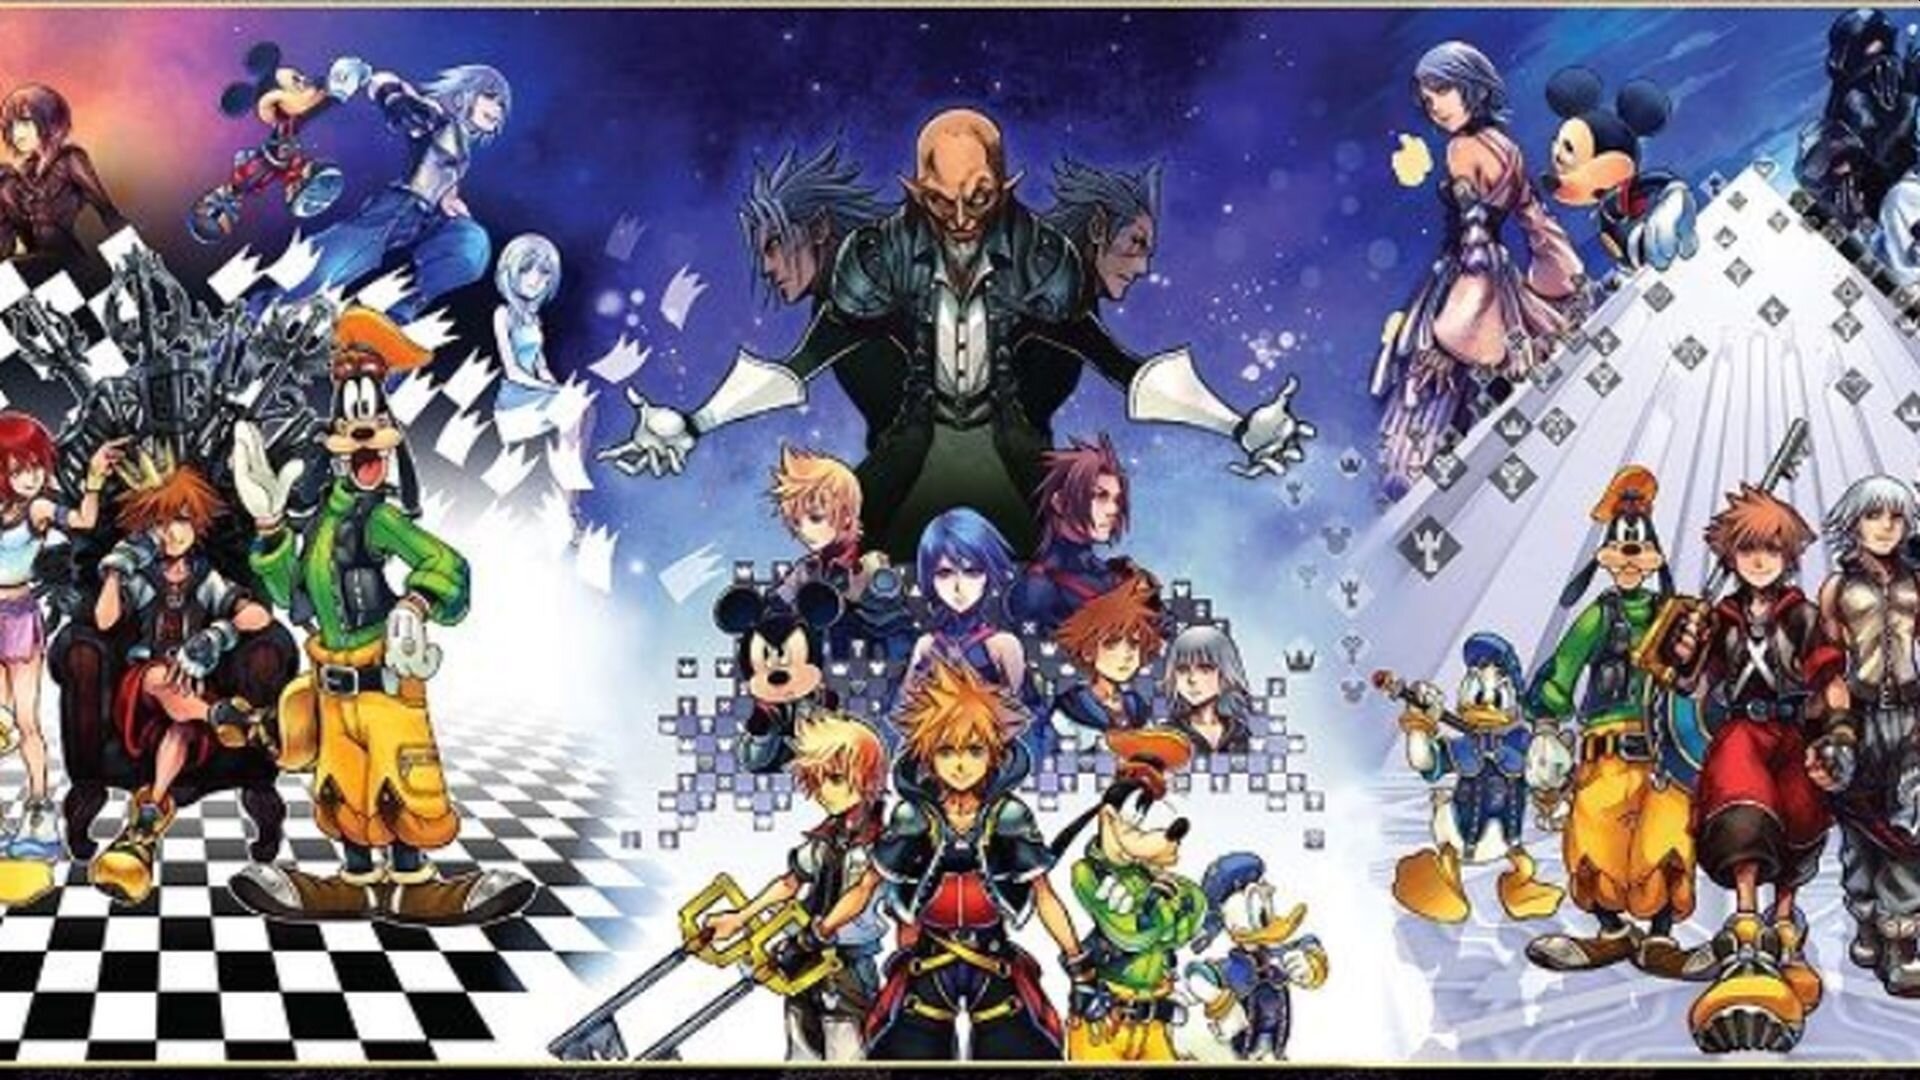  Kingdom Hearts Re:coded : Square Enix LLC: Video Games